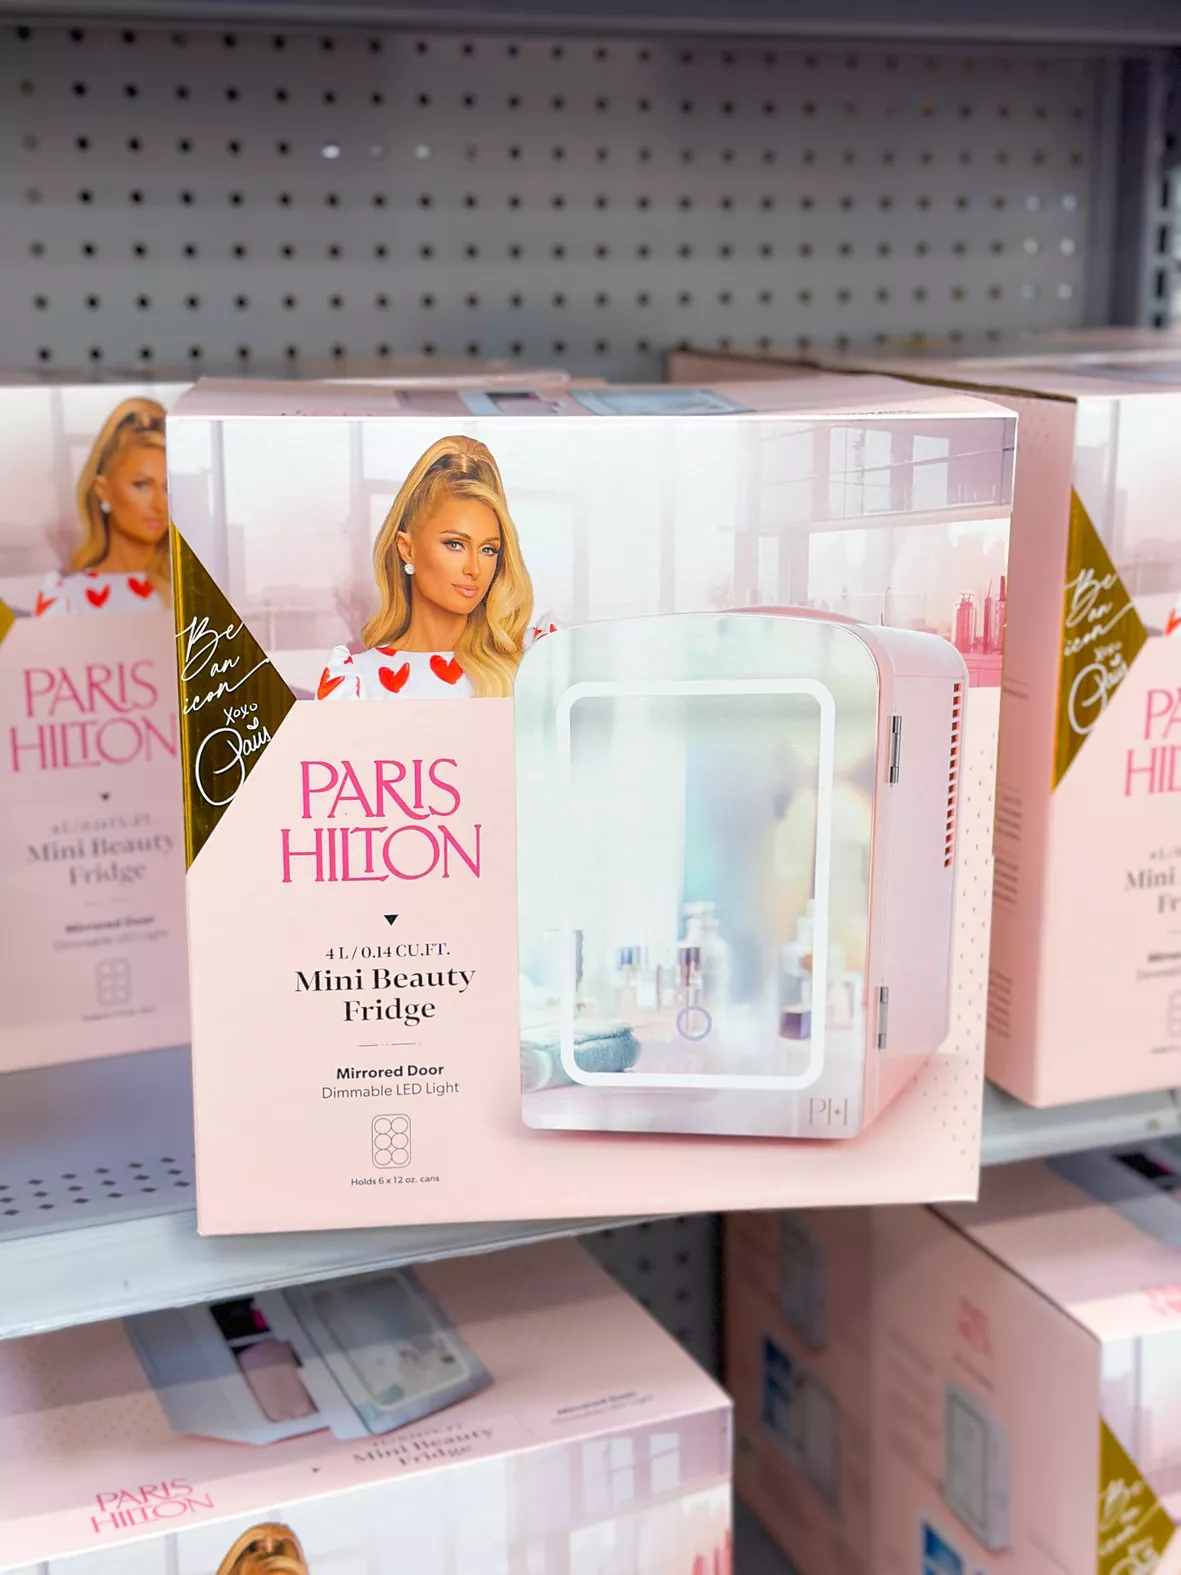  Paris Hilton Mini Refrigerator and Personal Beauty